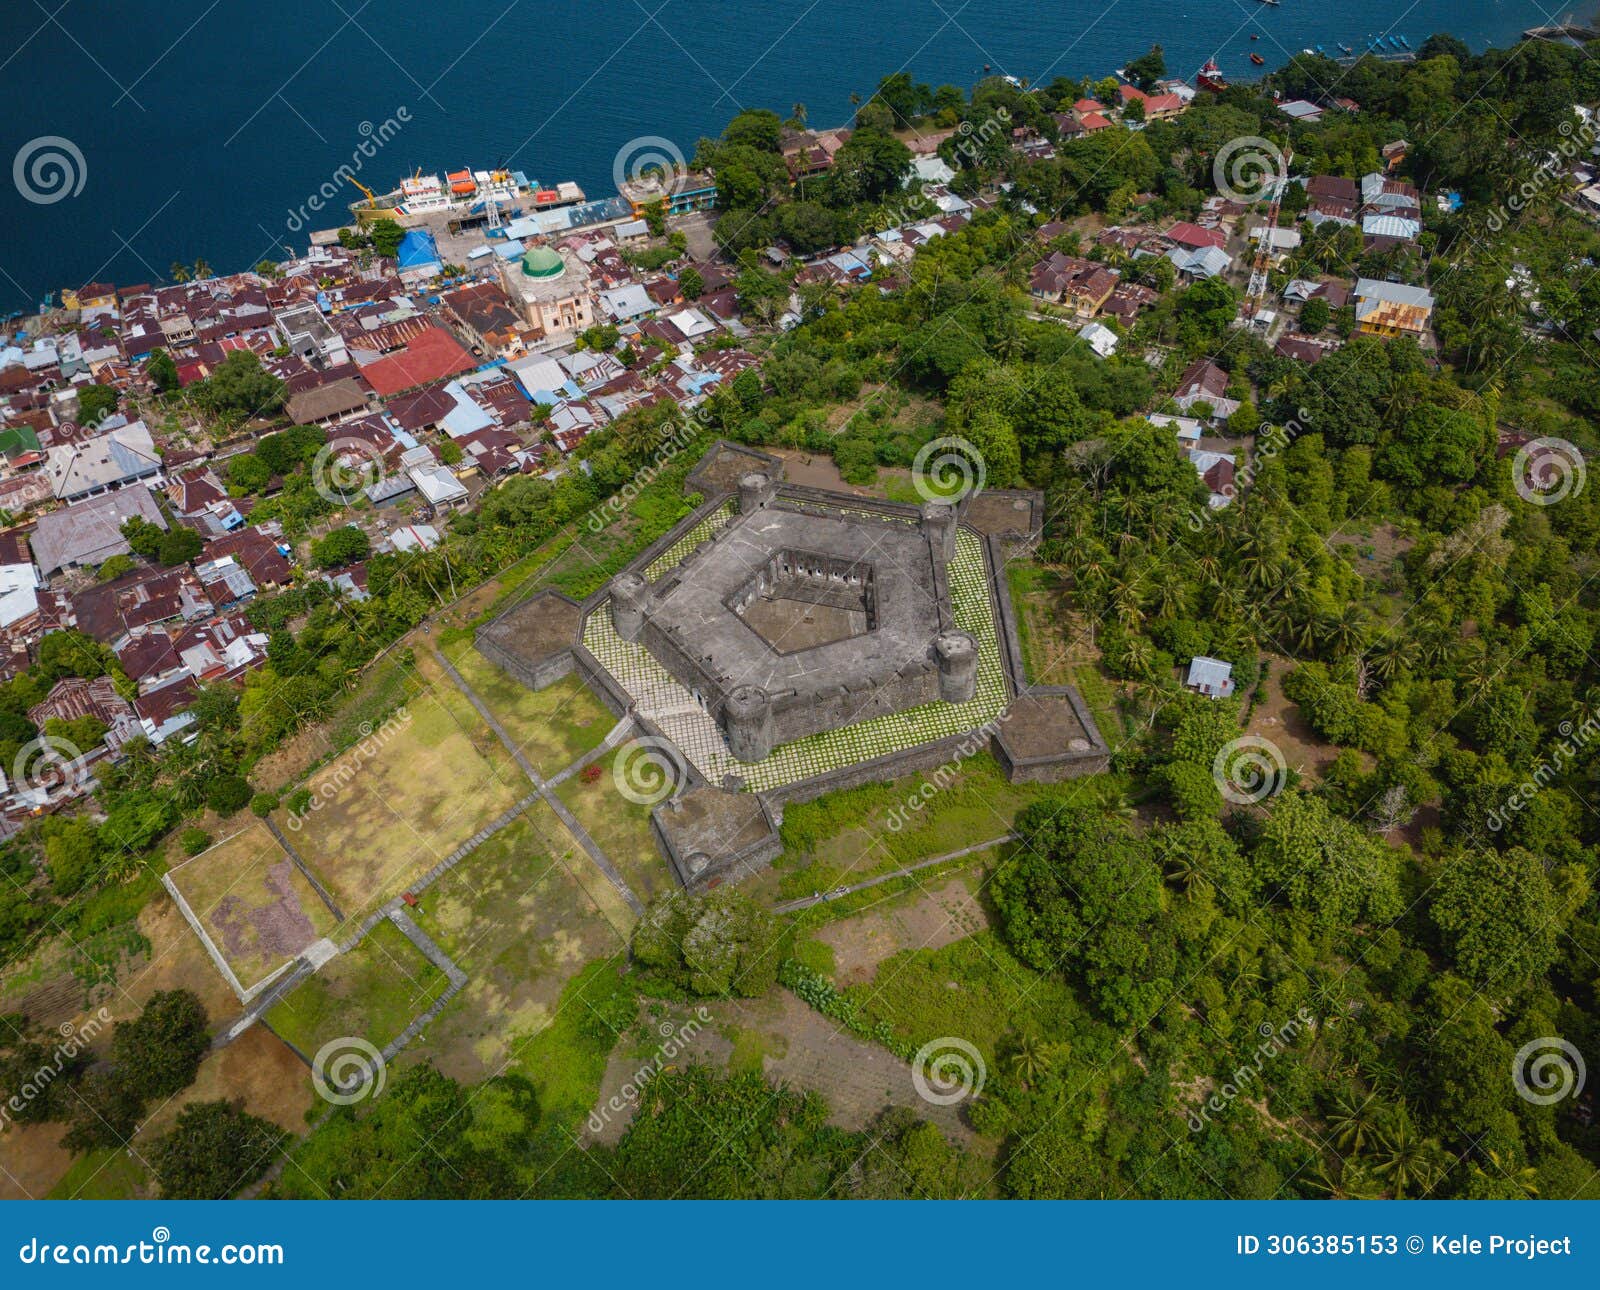 belgica fort in banda naira island, central maluku